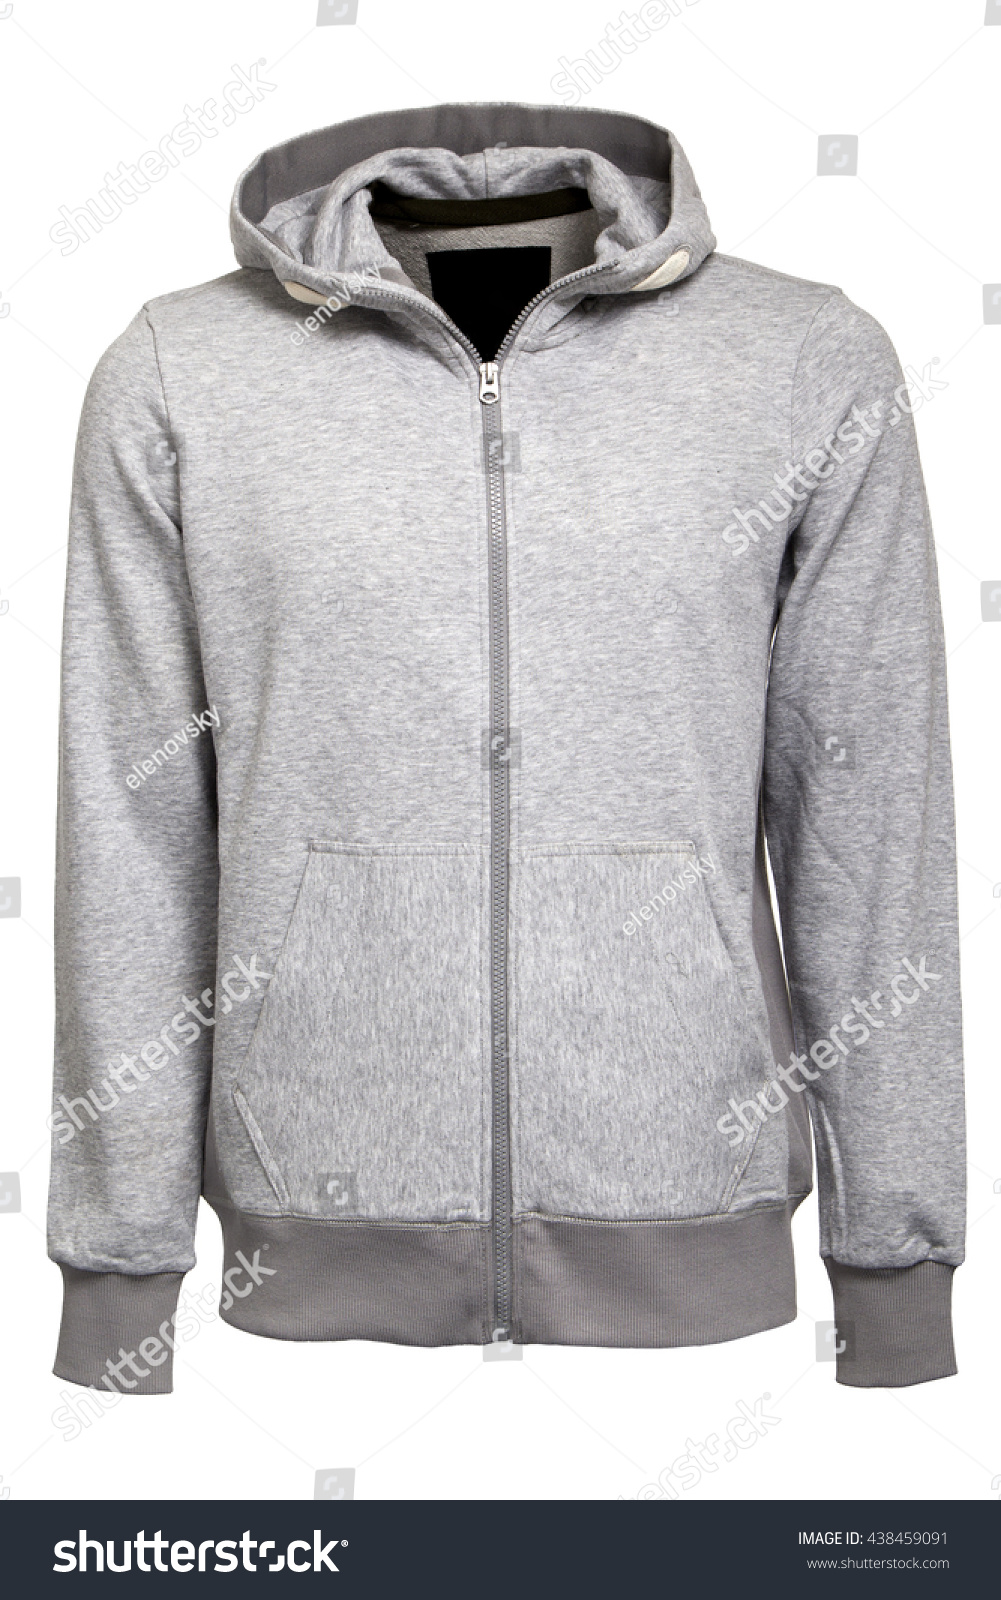 Male Sweatshirt Stock Photo 438459091 : Shutterstock